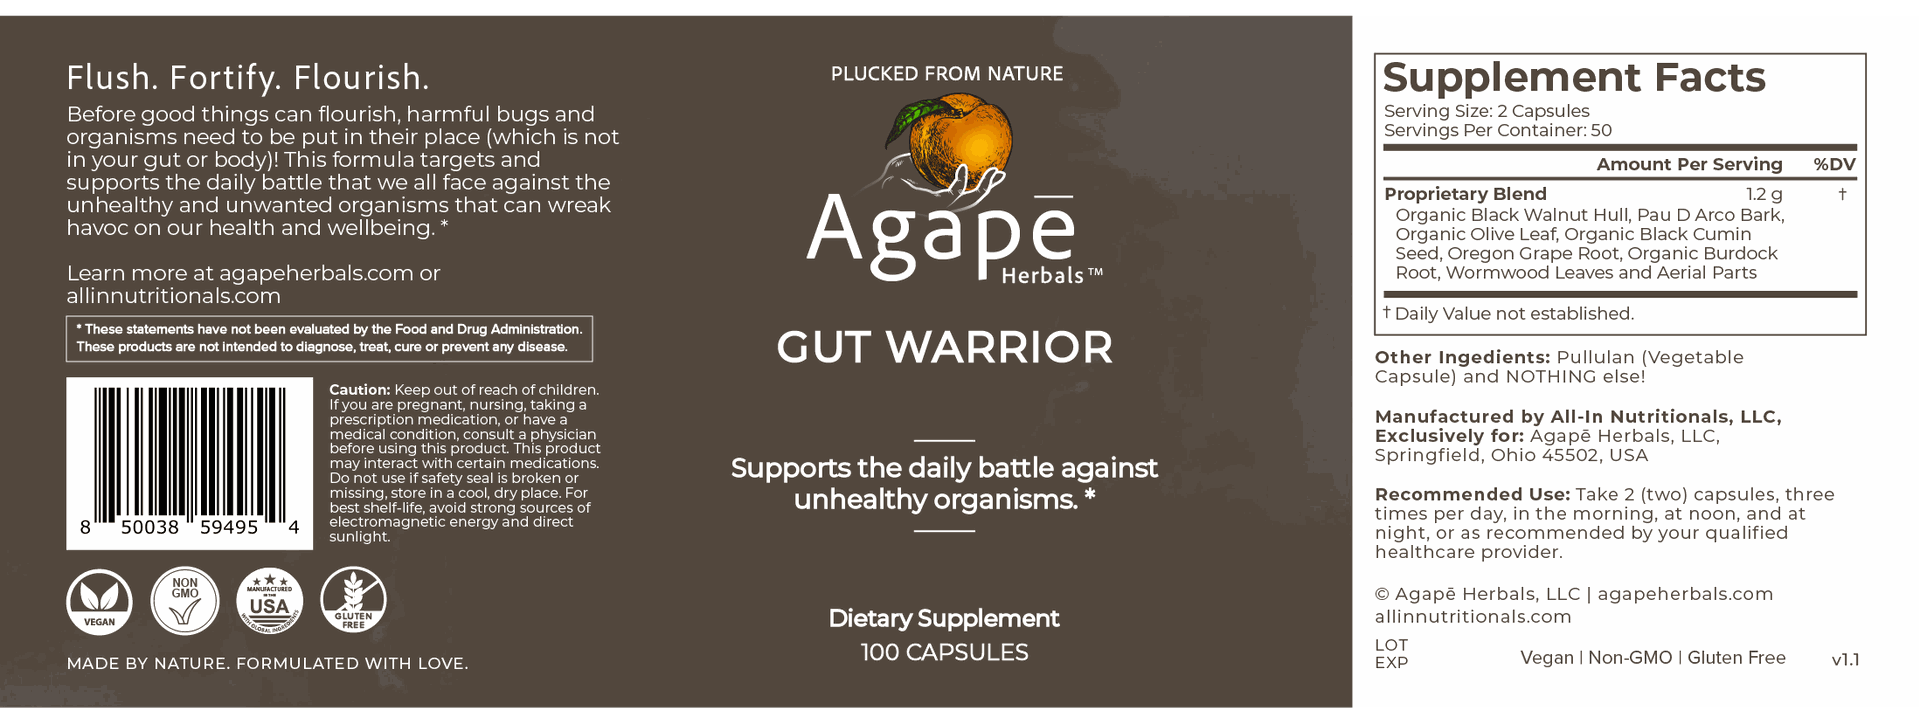 Agapē Herbals™ Gut Warrior